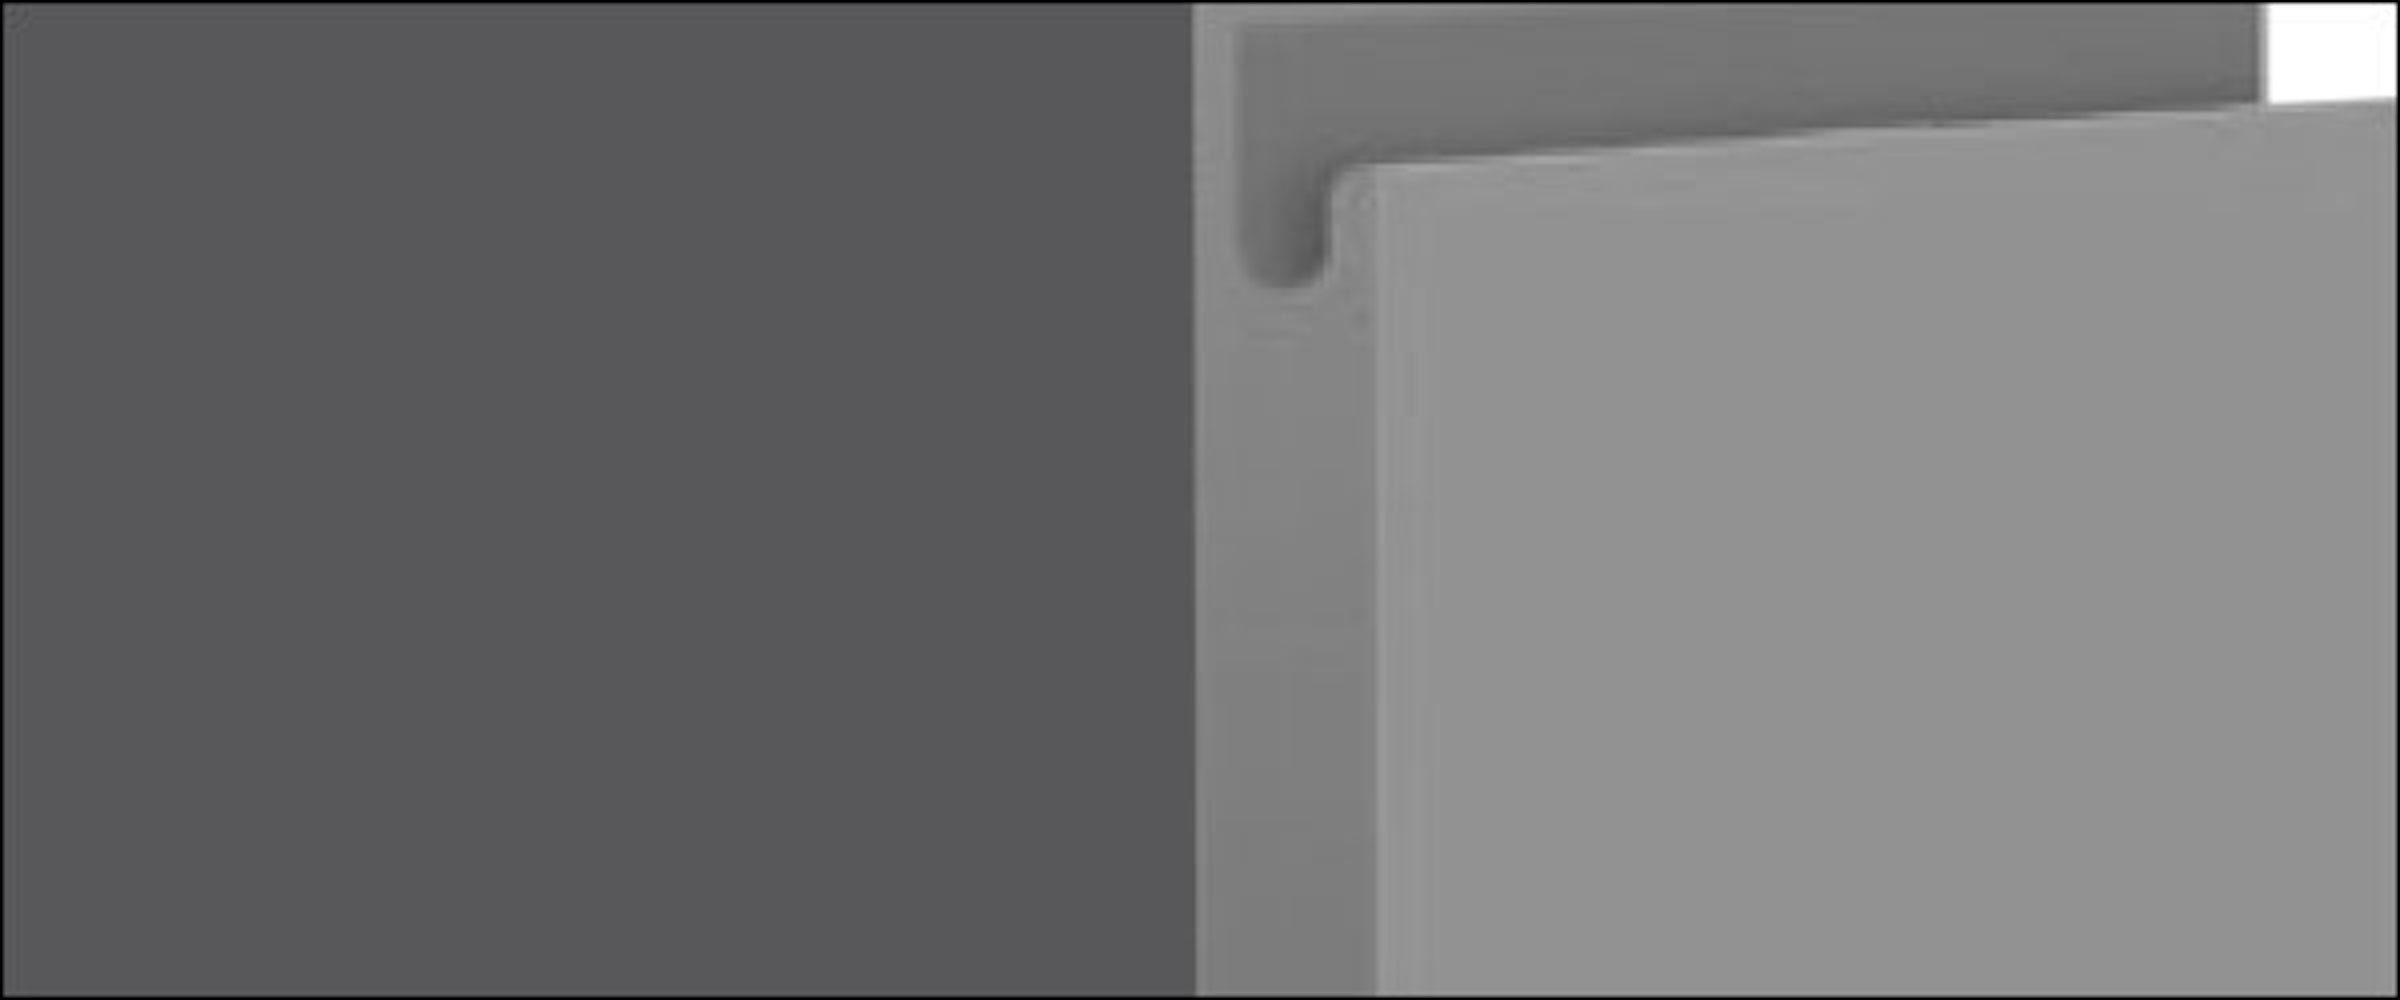 (Vollauszug) 1 Avellino 60cm Feldmann-Wohnen Korpusfarbe grey wählbar dust grifflos Front- matt Schublade & Backofenumbauschrank Acryl